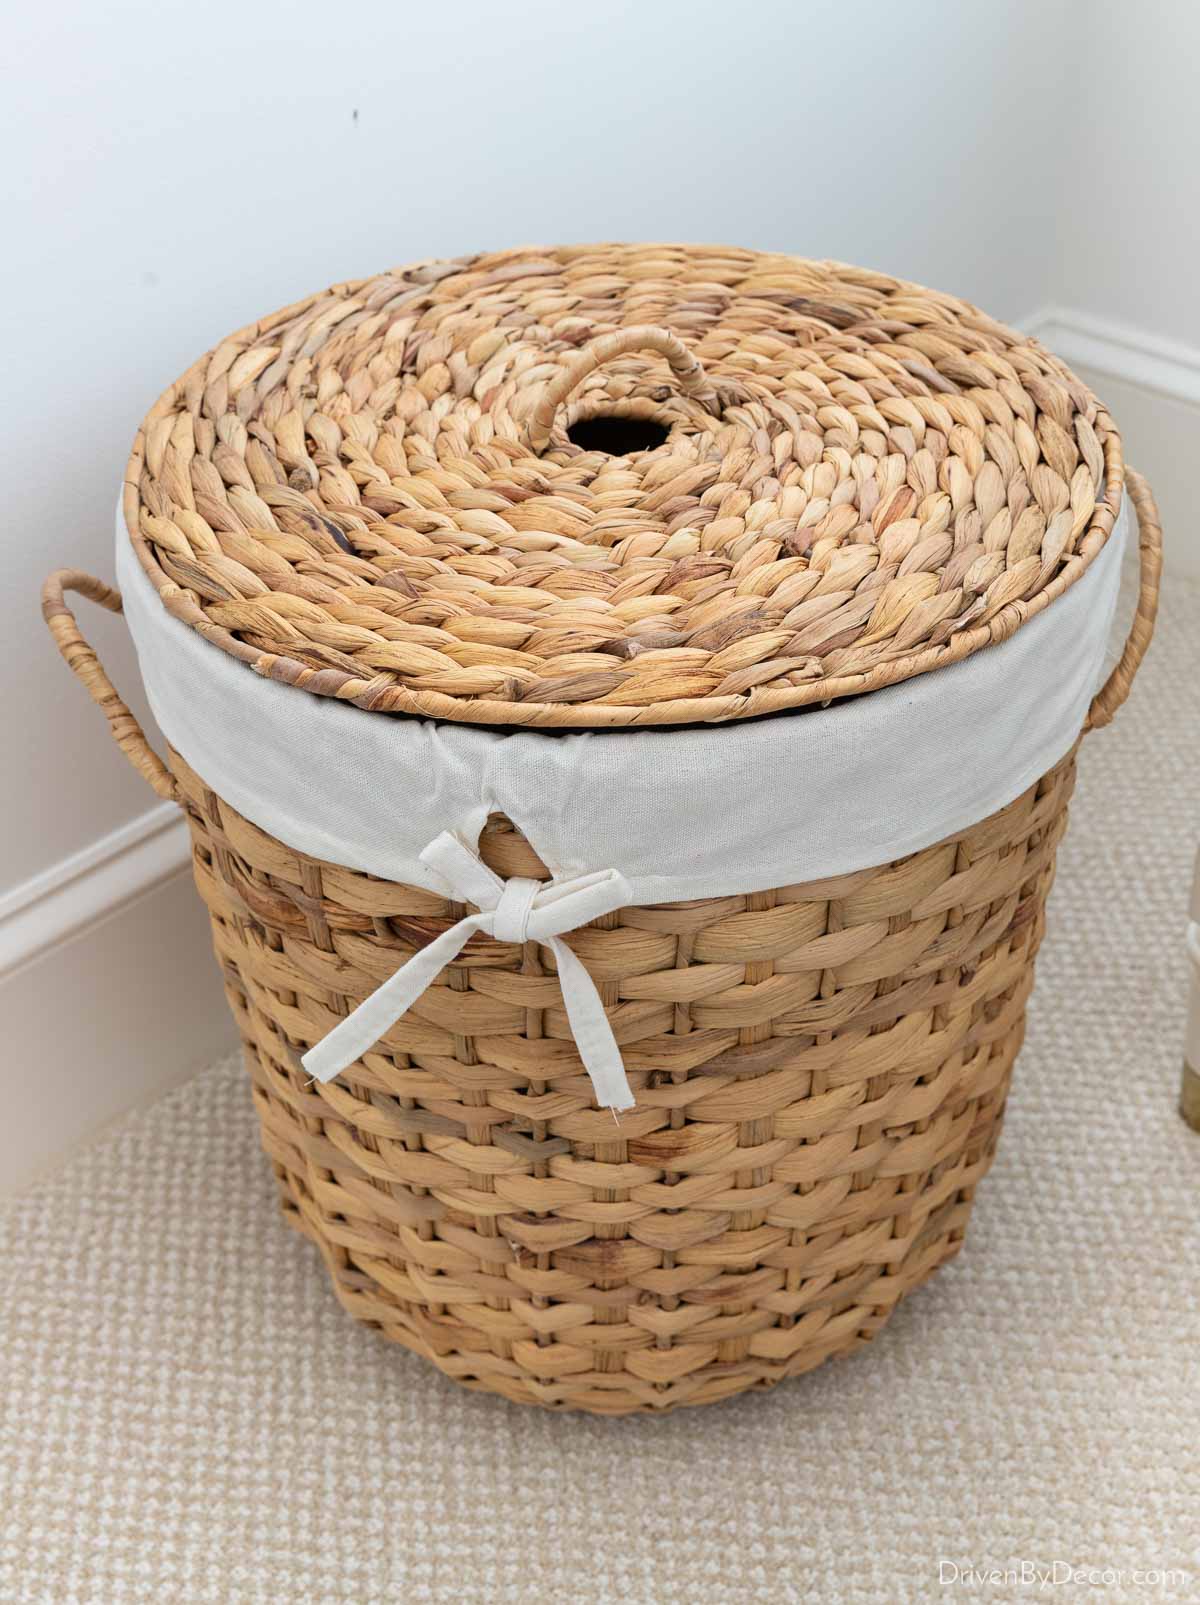 Woven basket used as hamper